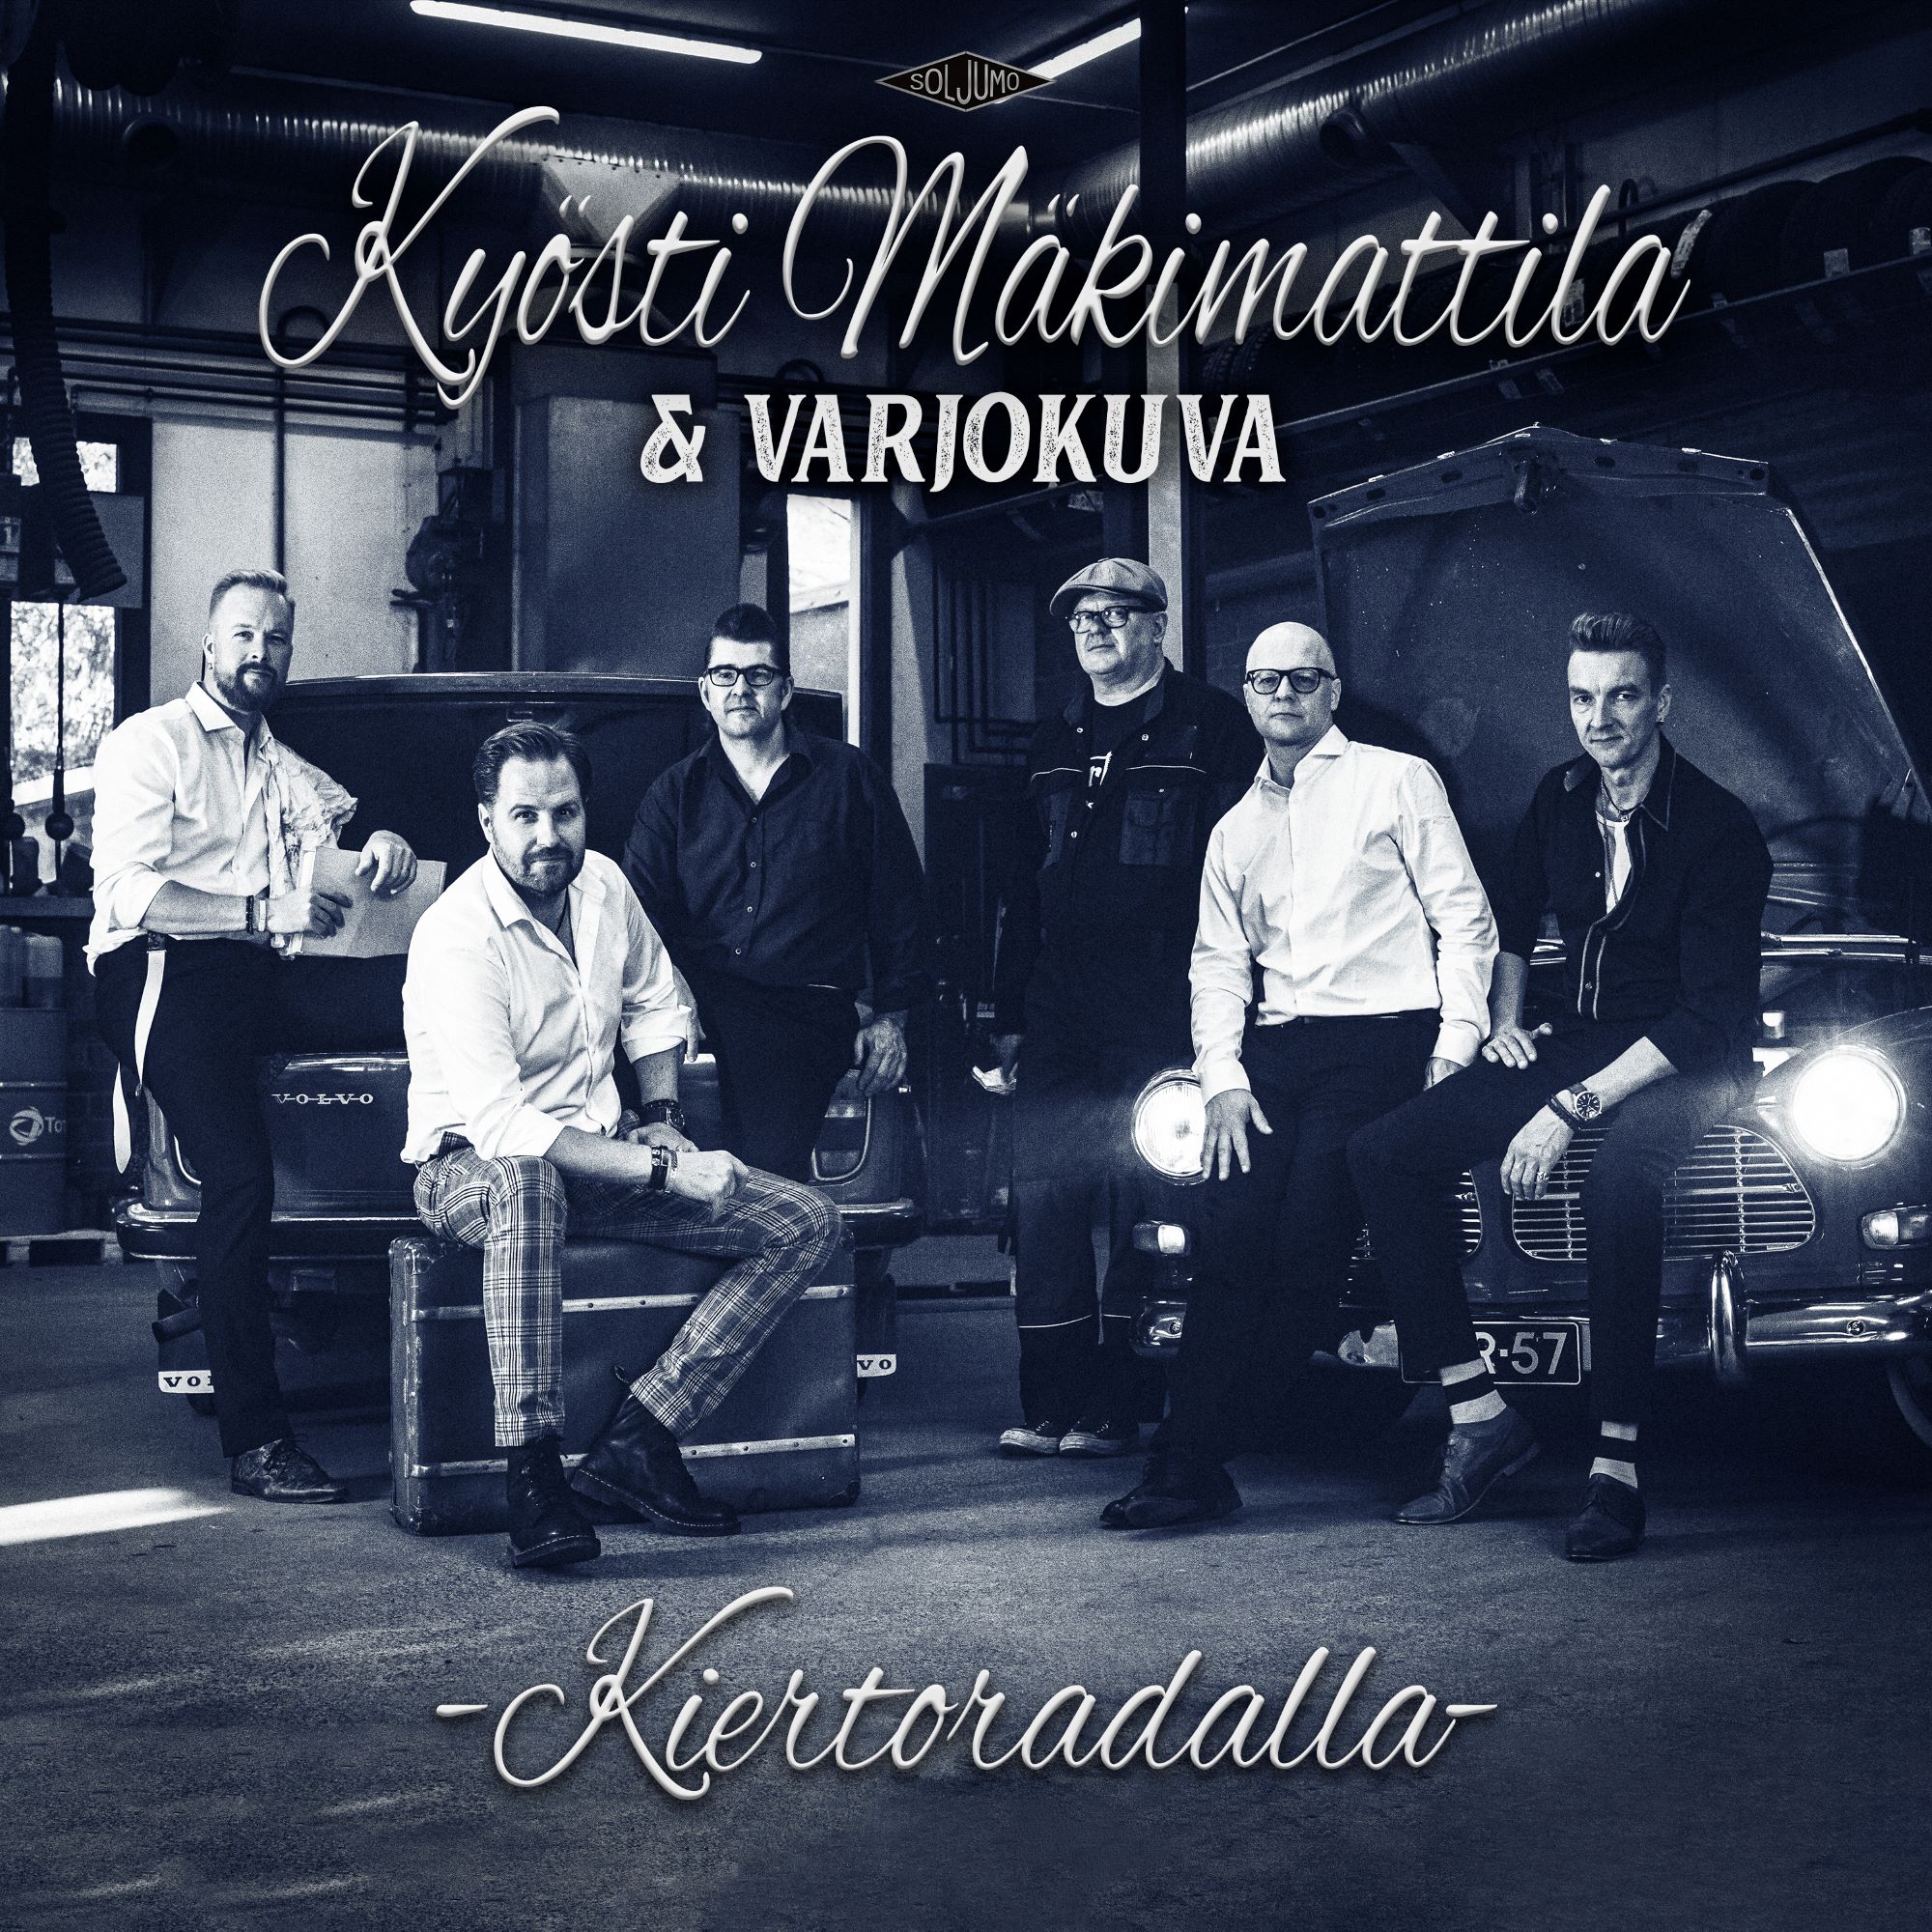 You are currently viewing Kyösti Mäkimattila & Varjokuva – Kiertoradalla